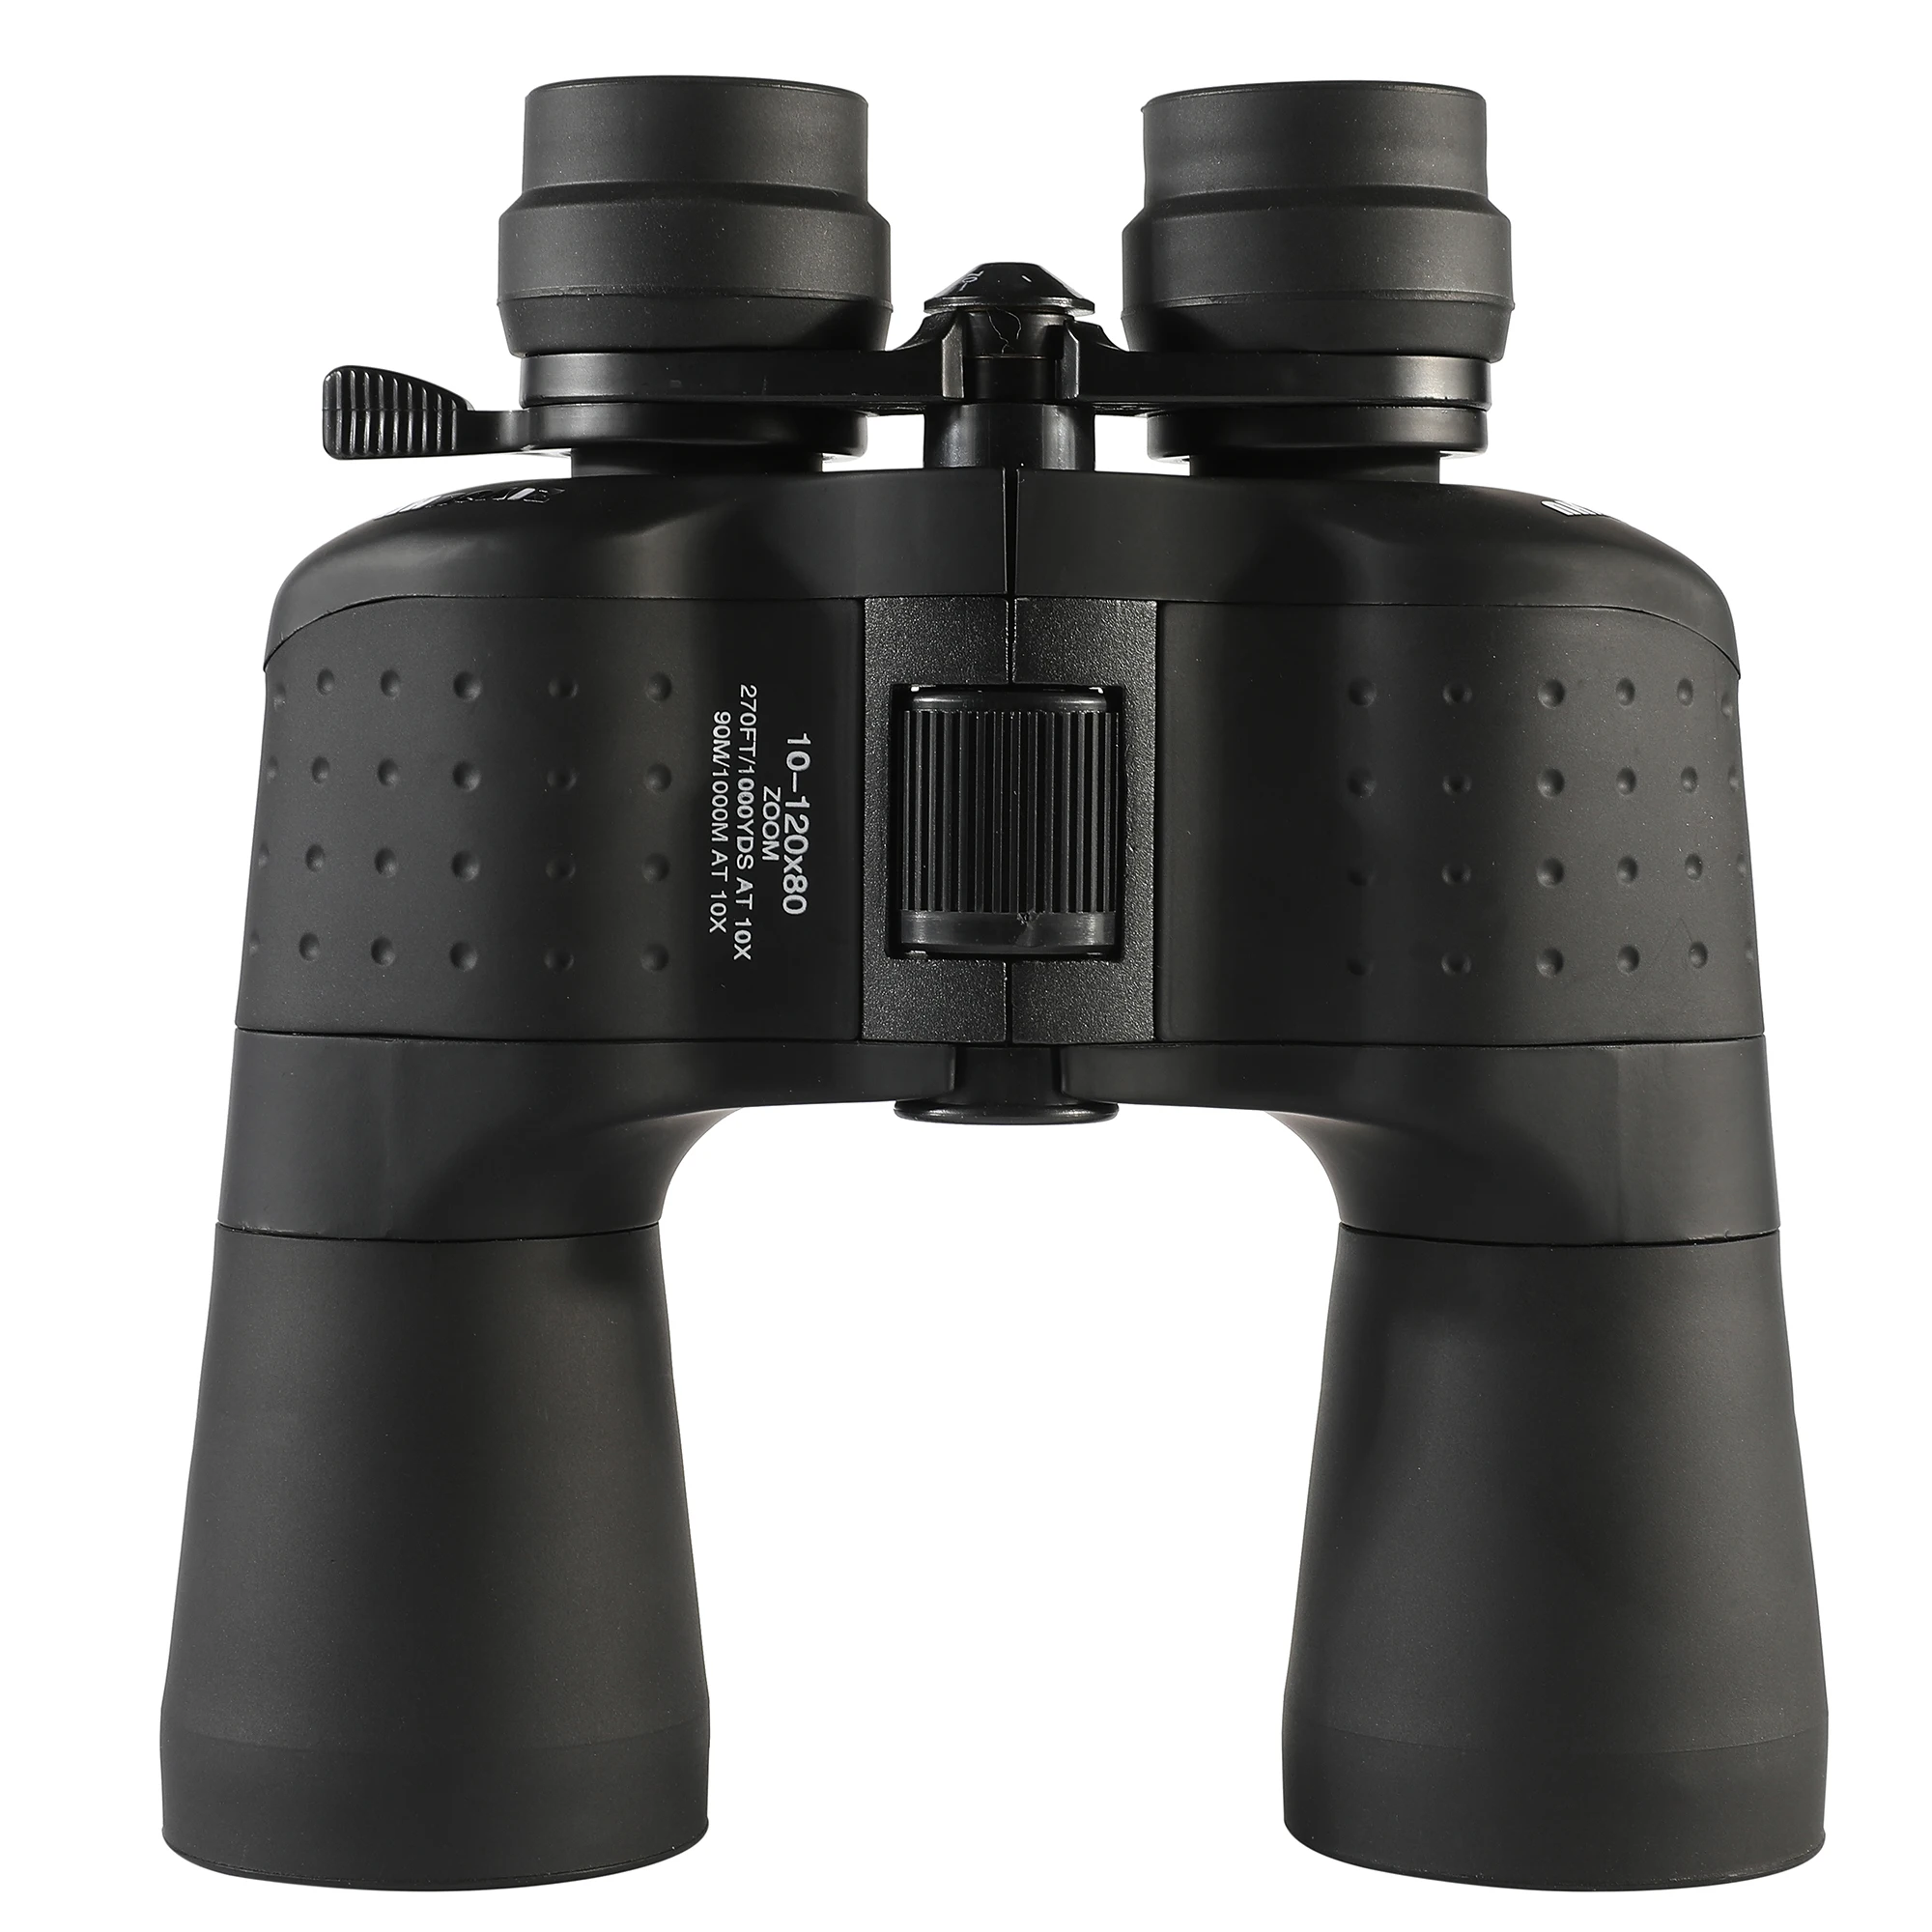 Low Light Telescope HD Professional Zoom Binoculars Outdoor Camping Viewing Birthday Gift handheld Telescope Equipment 10-120x80